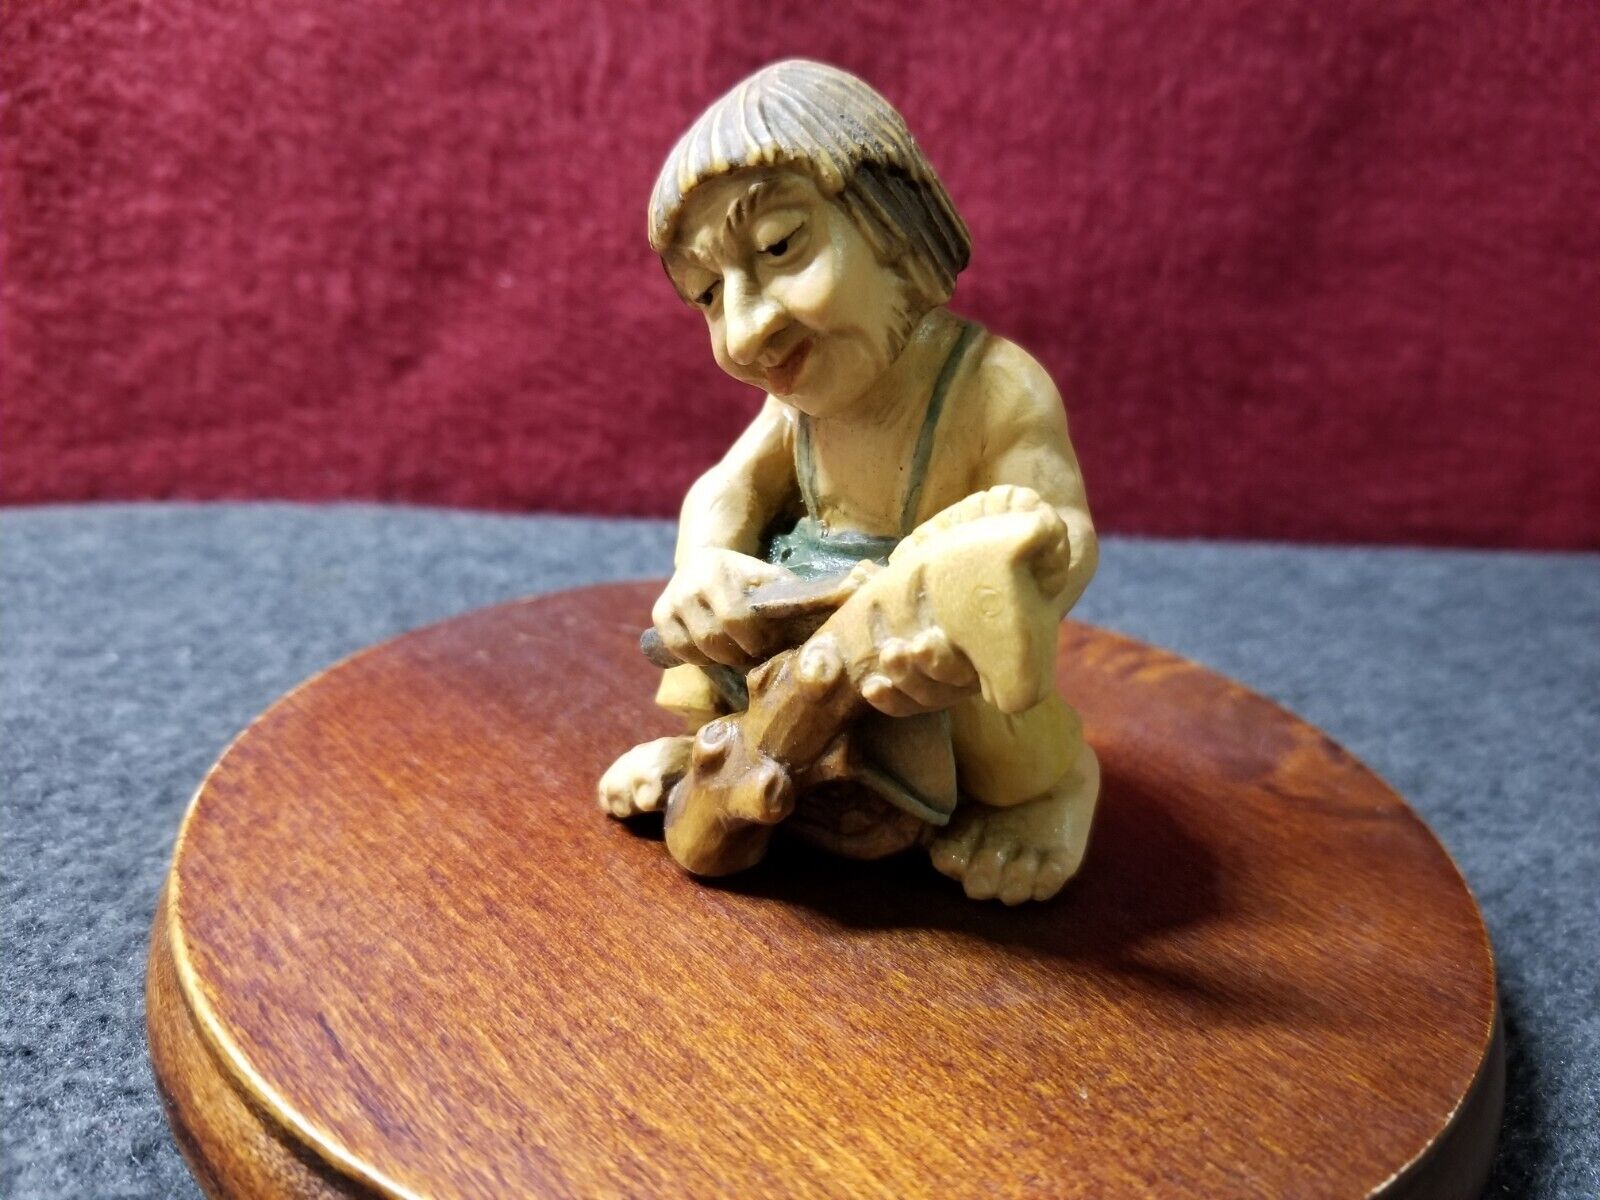 Vintage Anri The Toymaker Little Folks of the Salvan Carved Wood Figure 1950's